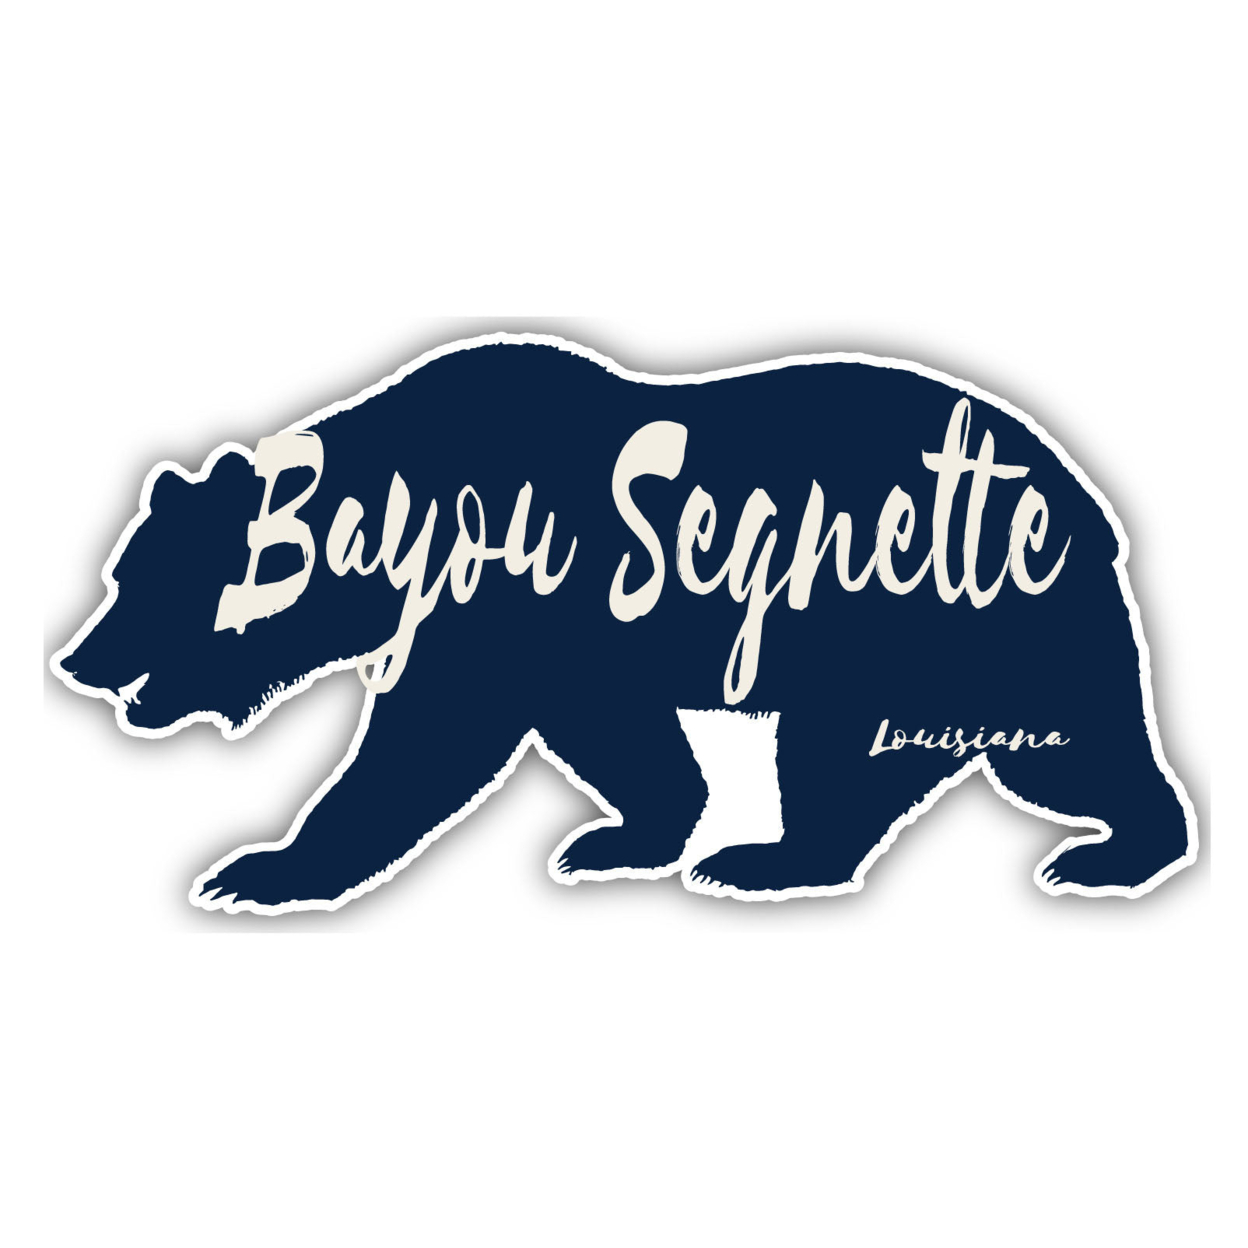 Bayou Segnette Louisiana Souvenir Decorative Stickers (Choose Theme And Size) - 4-Pack, 6-Inch, Bear